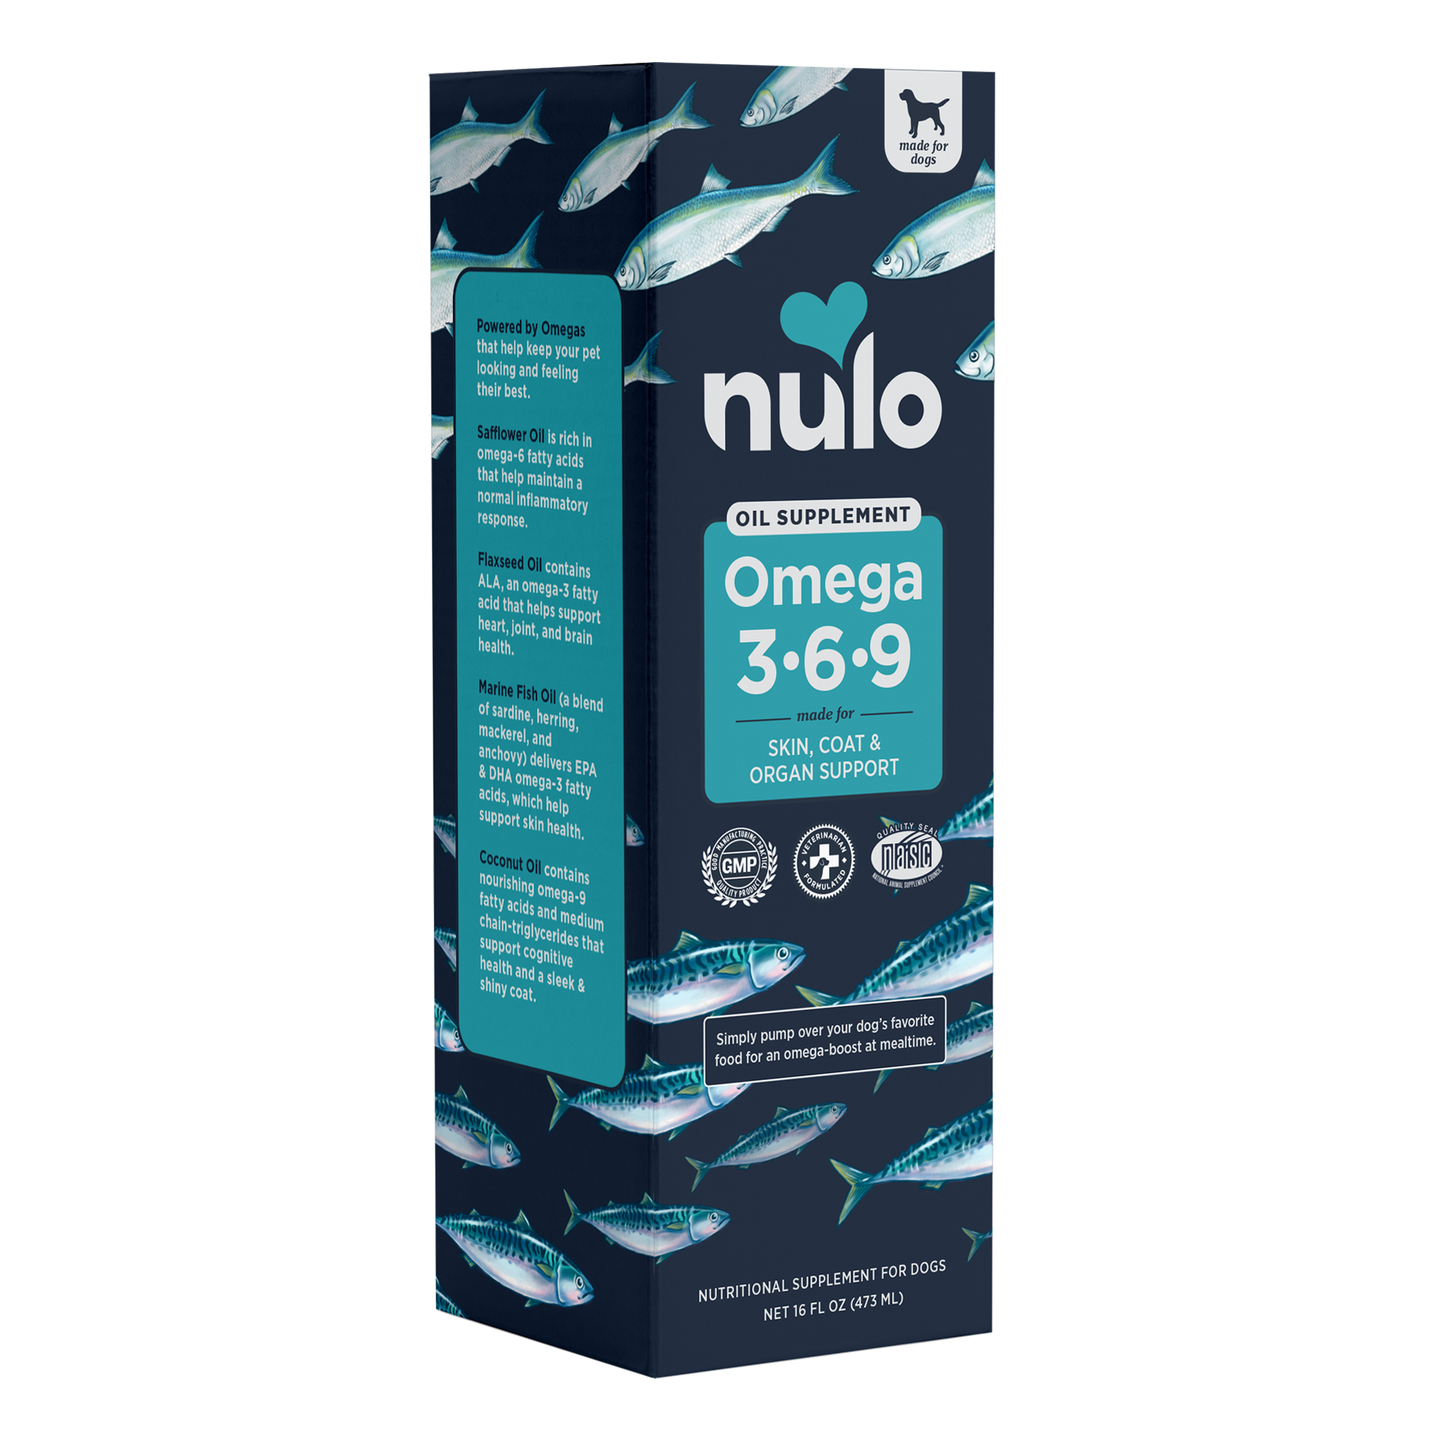 Nulo Oil Supplement - Omega 3-6-9 Skin, Coat & Organ Support 16oz